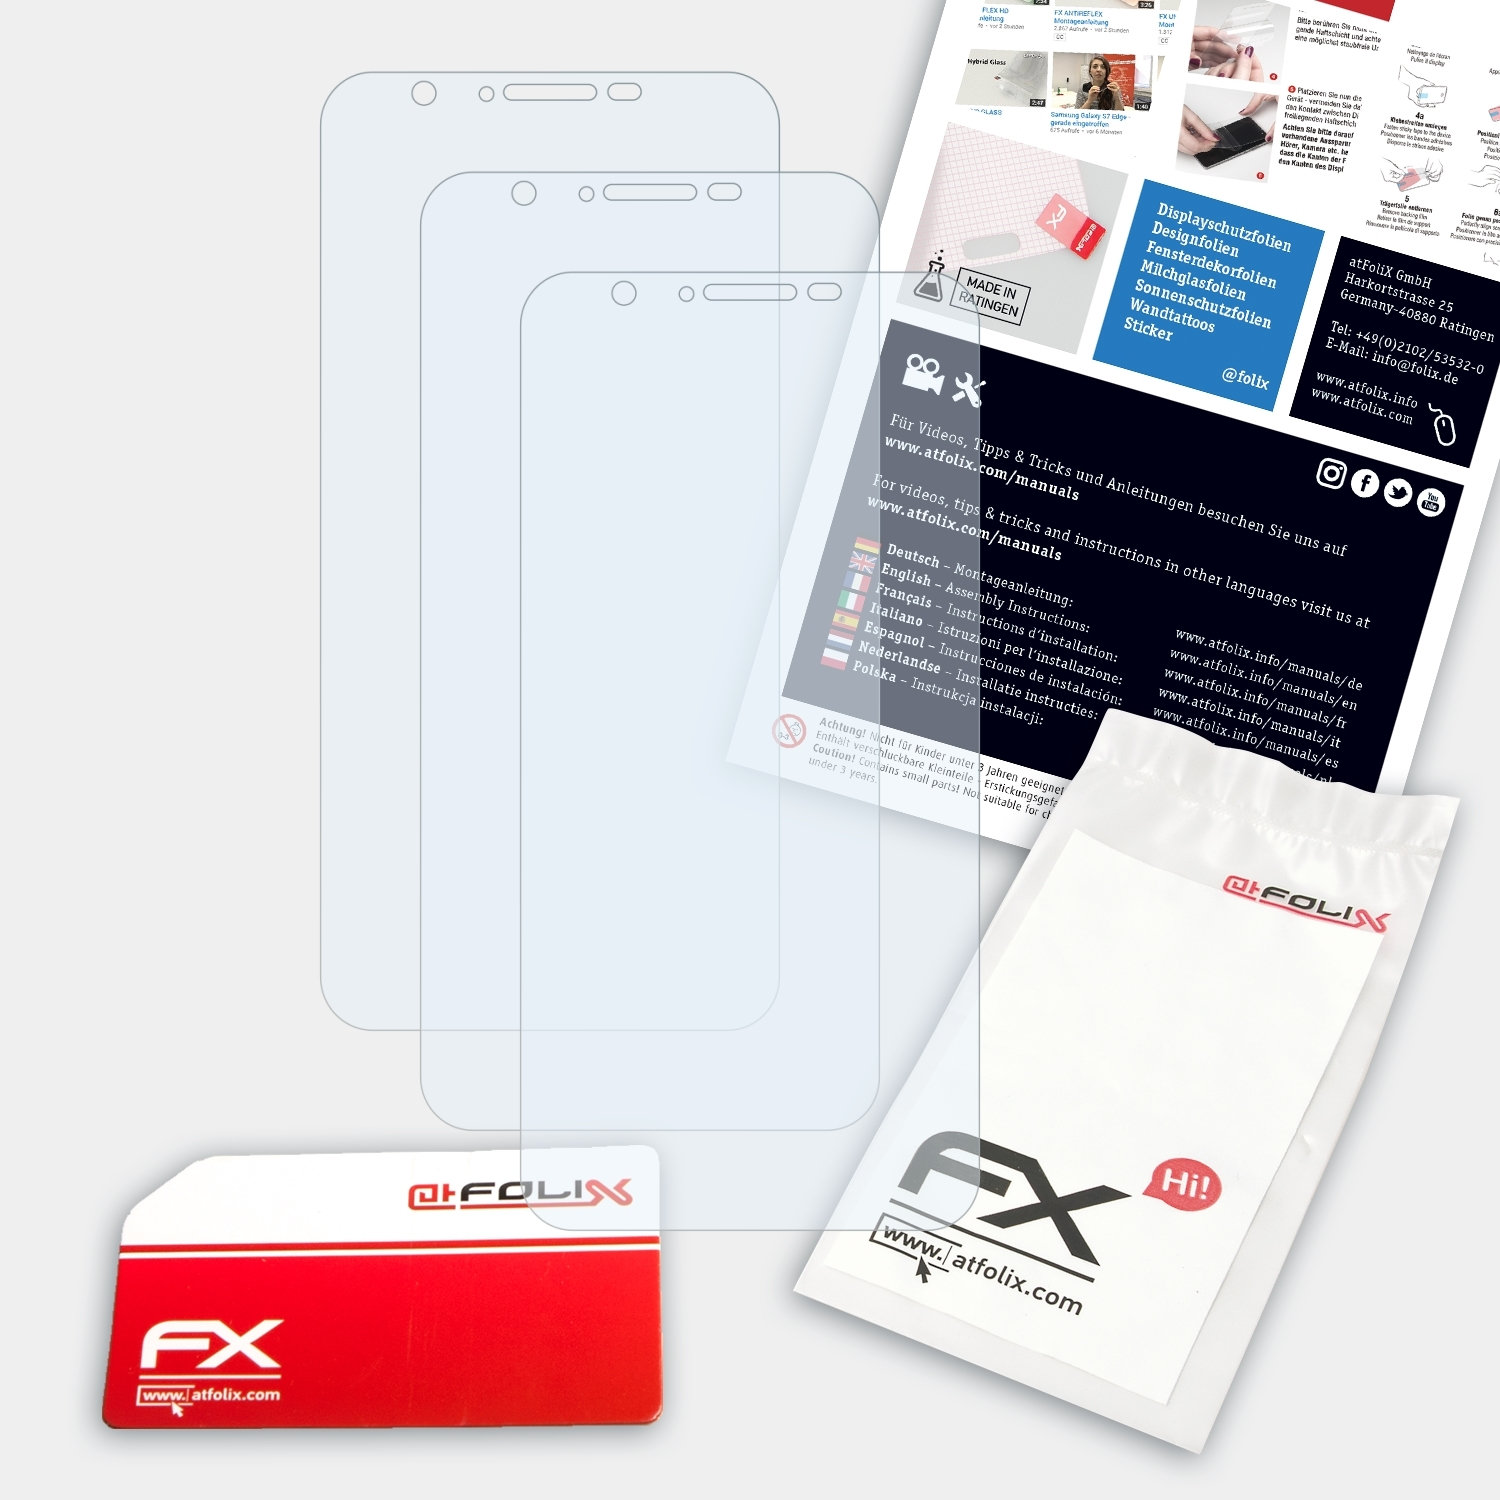 ATFOLIX 3x FX-Clear Max) Oukitel U16 Displayschutz(für